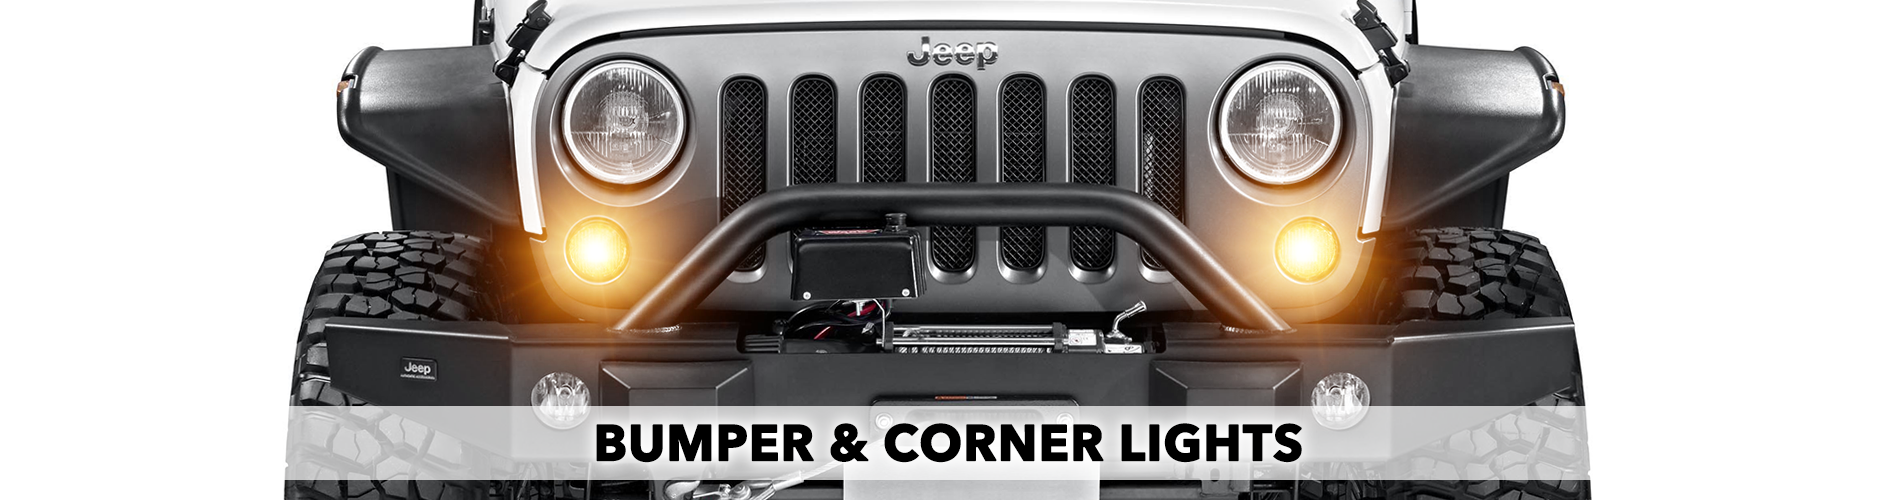 Bumper & Corner Lights